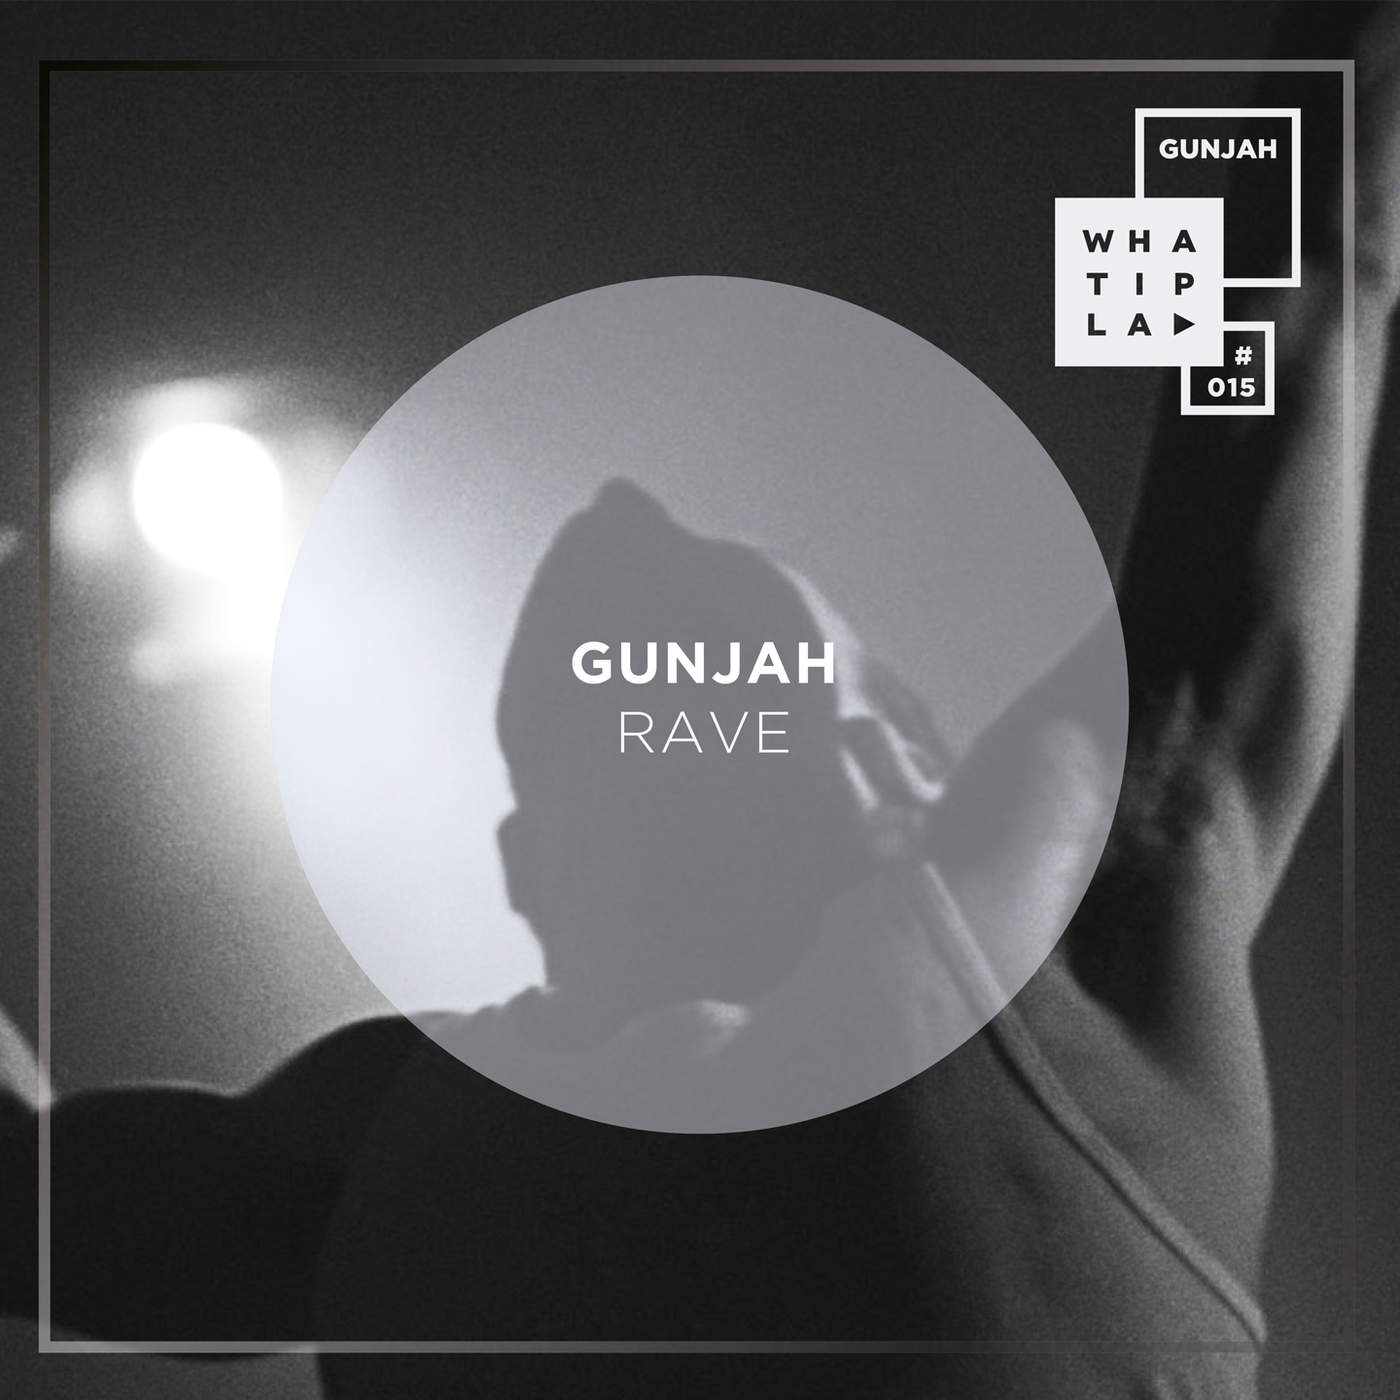 Gunjah - Rave (gui Boratto Remix) on Revolution Radio